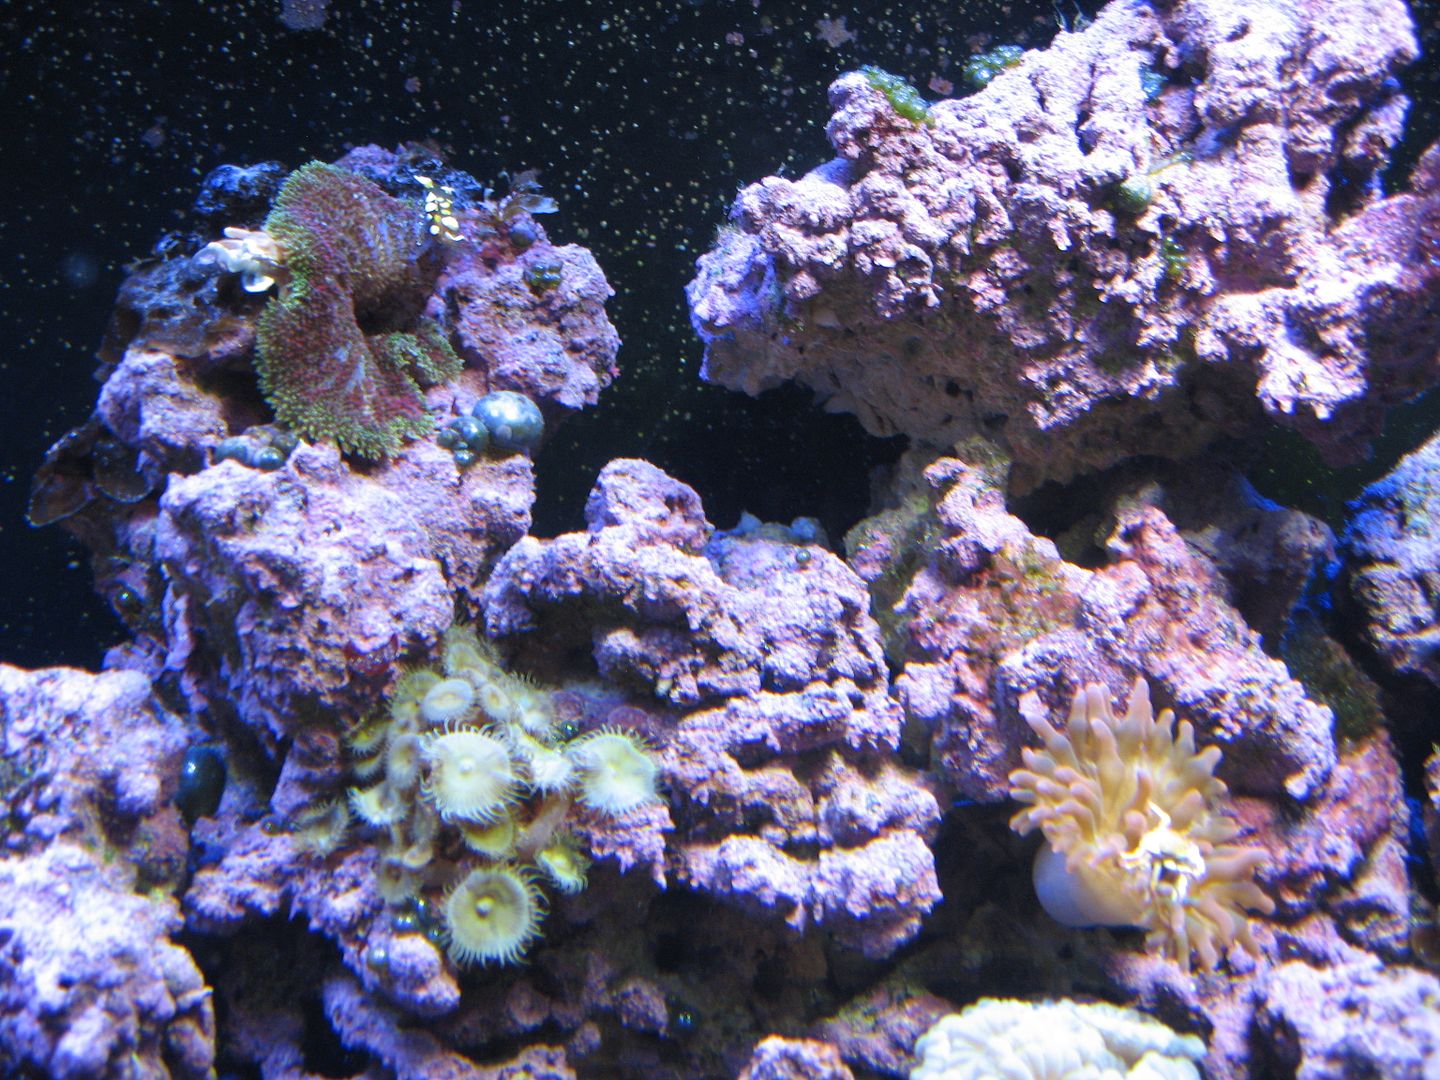 Aquarium_CrabsInNemsLeftDT_02SEP2012_zpsf06a2b30.jpg